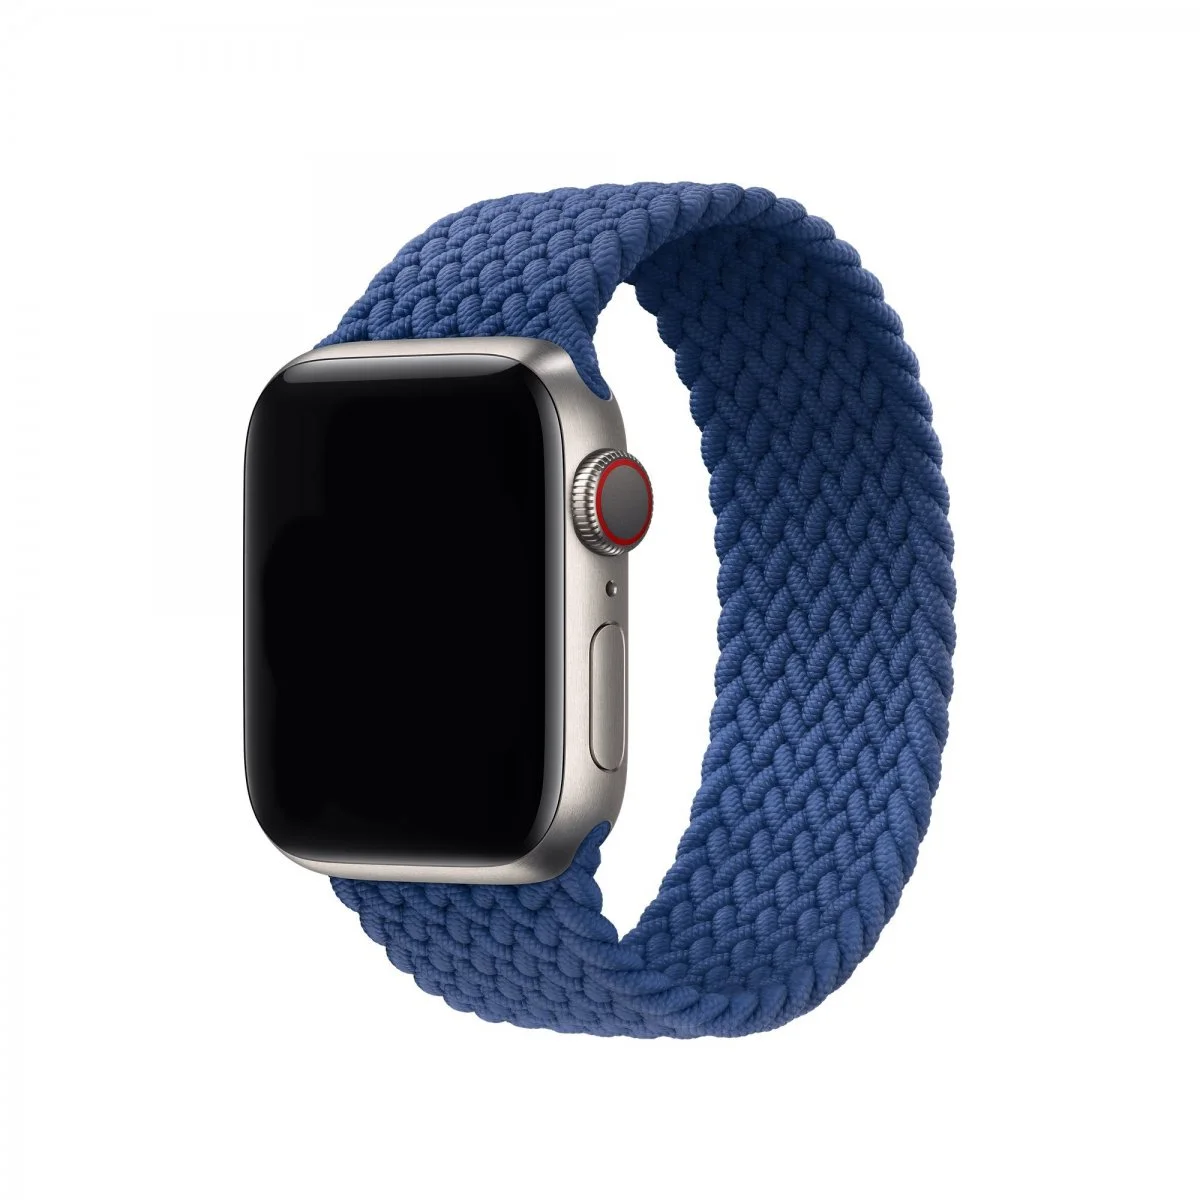 Řemínek iMore Braided Solo Loop Apple Watch Series 1/2/3 42mm - atlanticky modrý (XS)